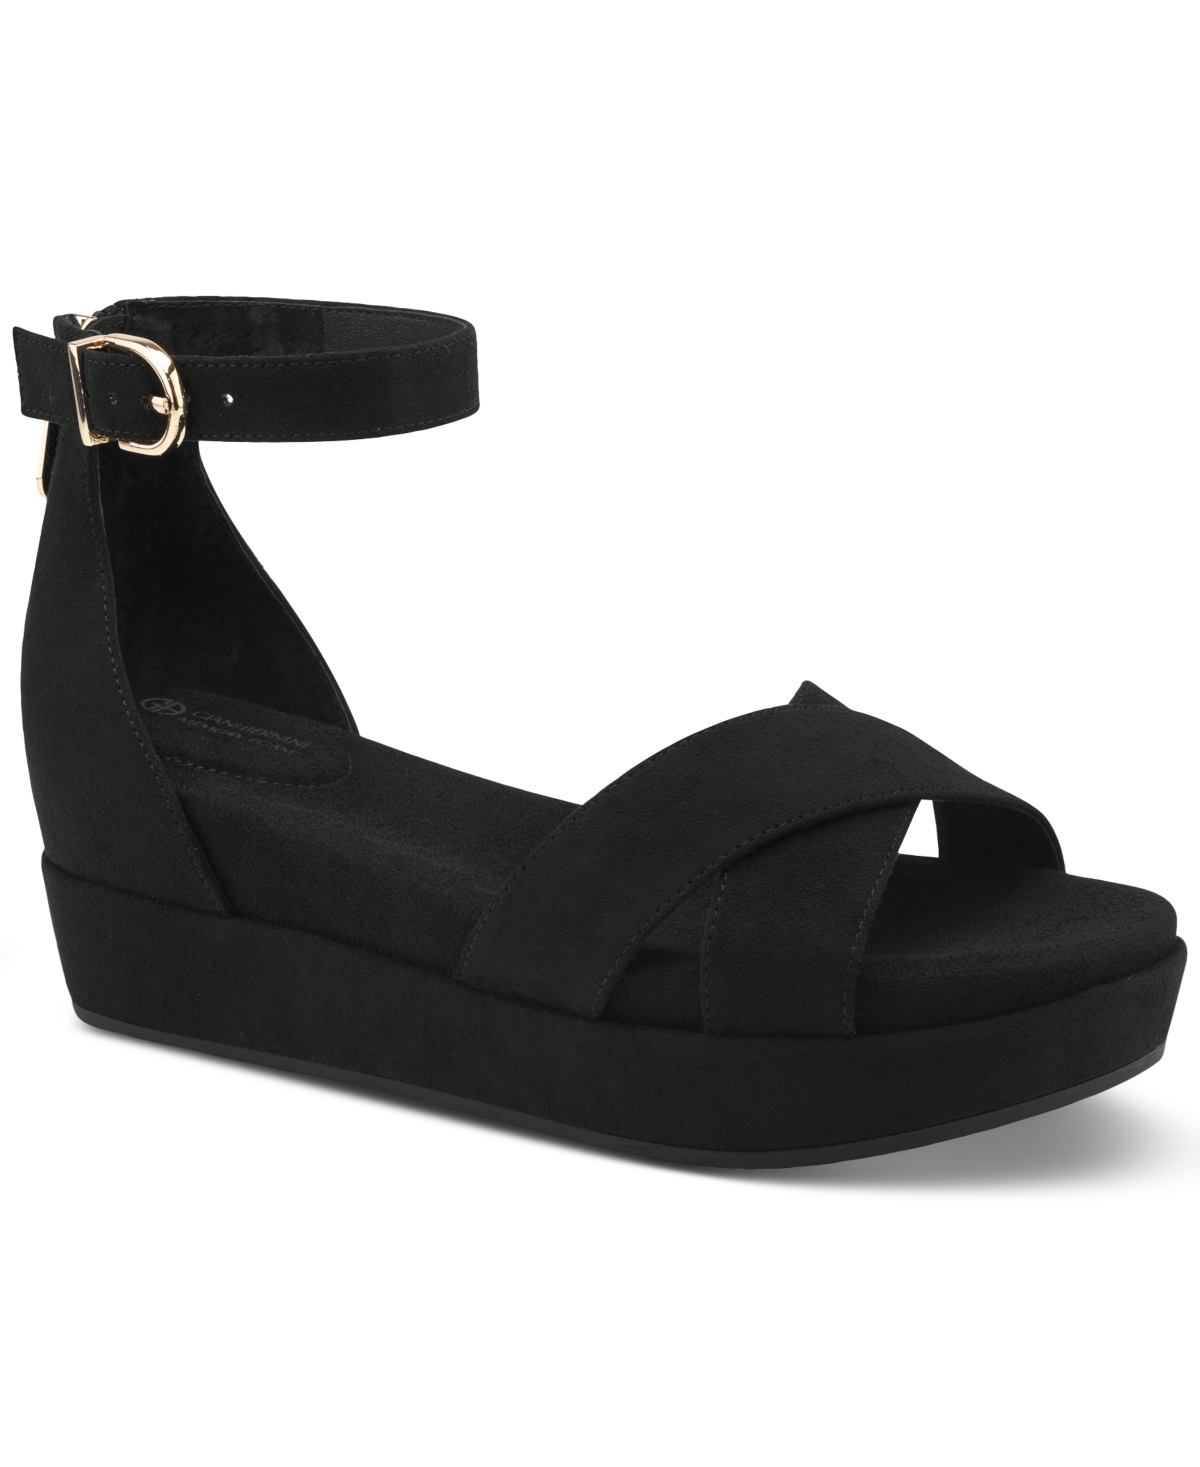 Women's Eviee Memory Foam Wedge Sandals, Created for Macy's - Black